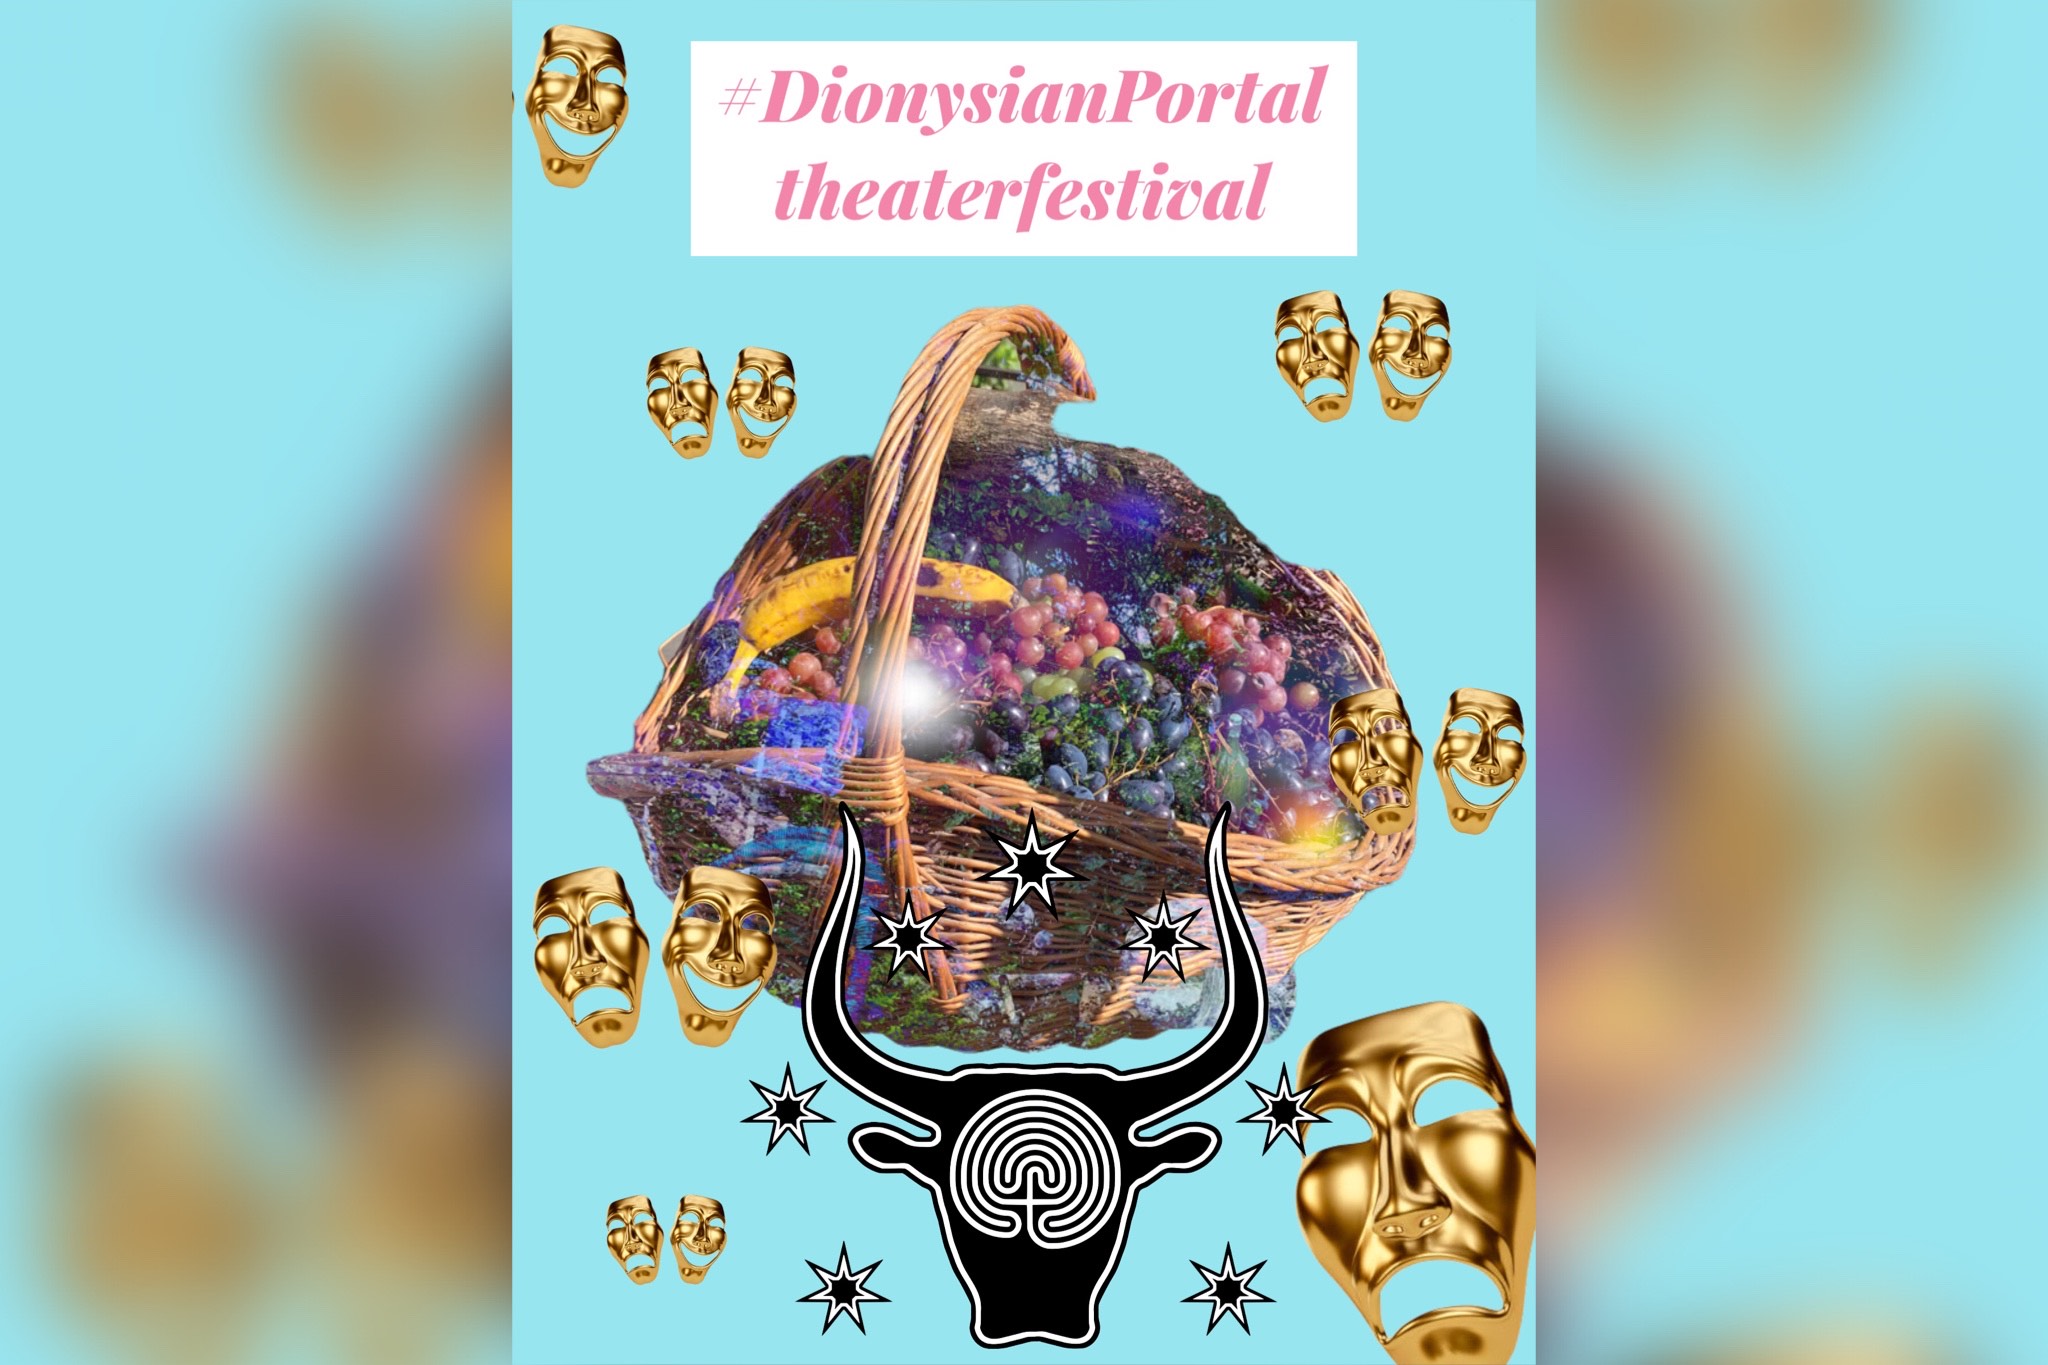 The Dionysian Portal: a TheaterFestival